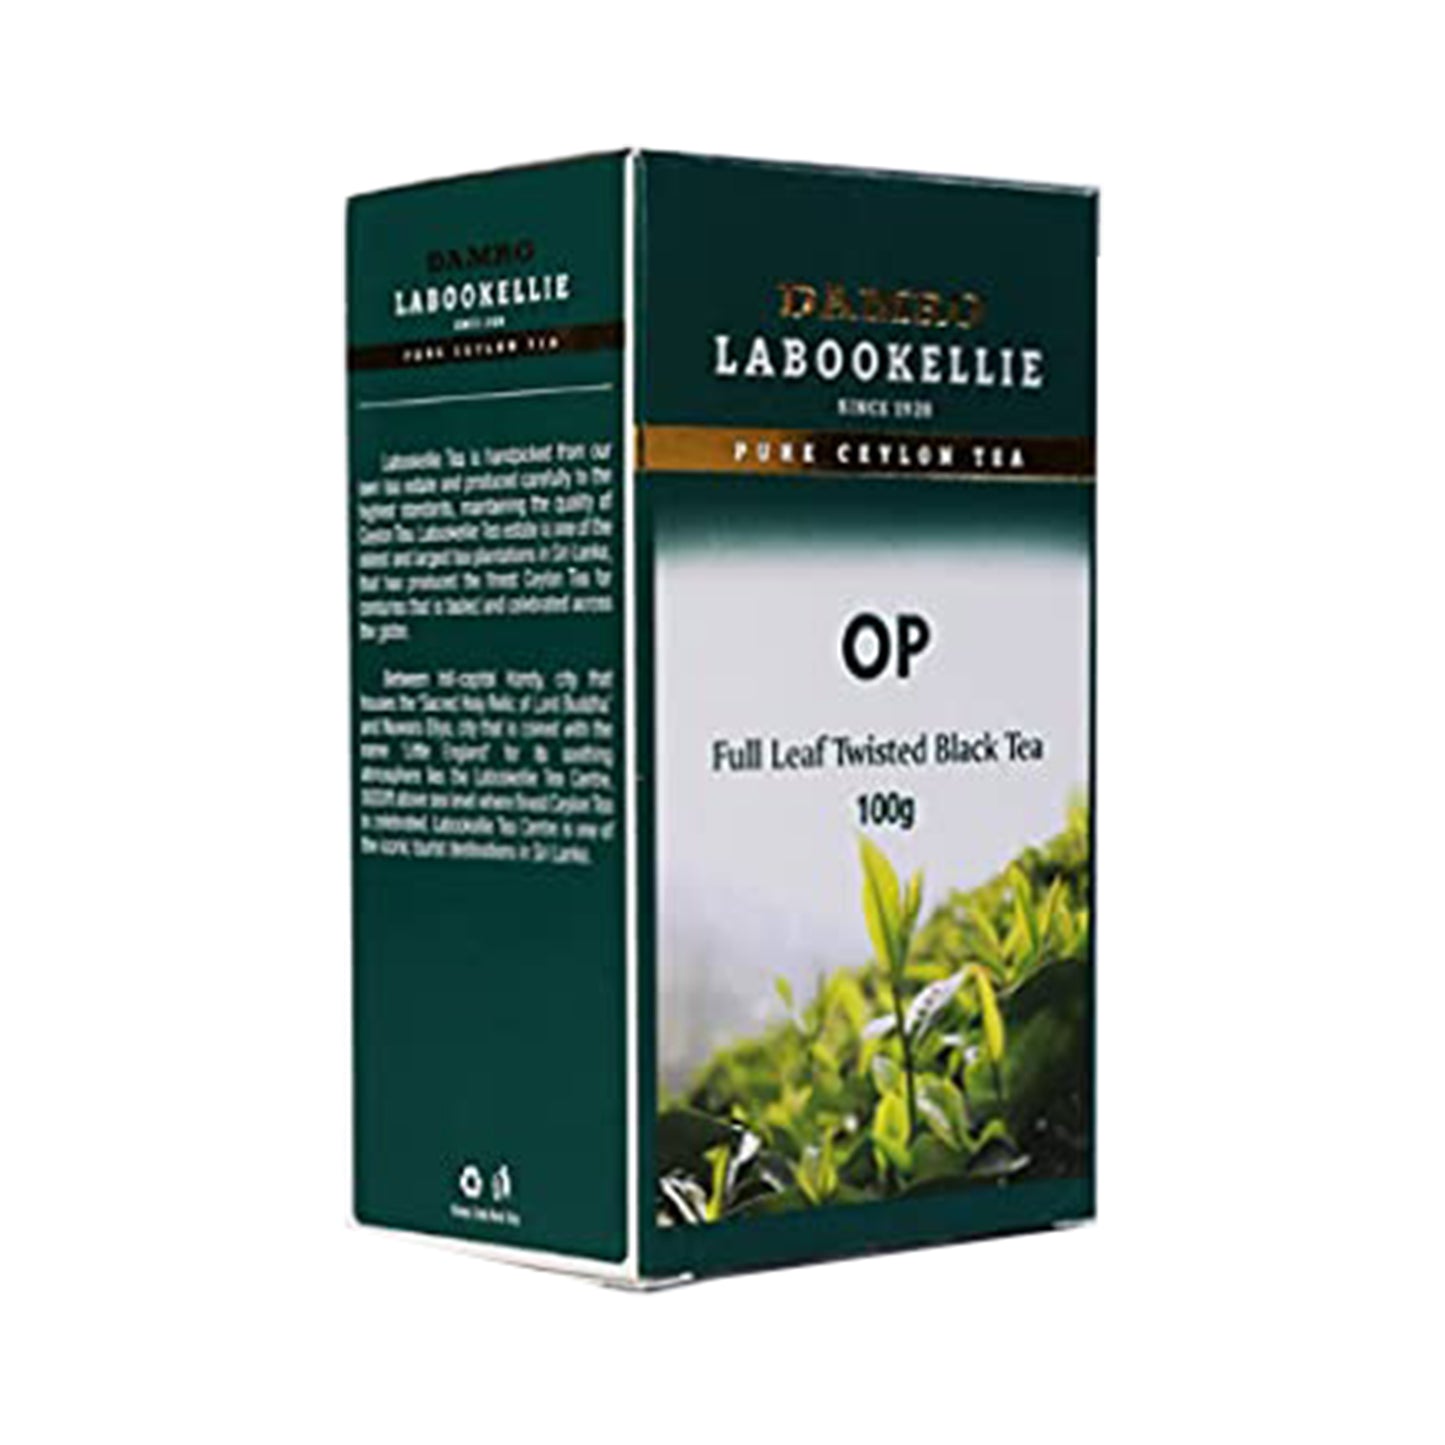 DG Labookellie OP Full Leaf Twisted Black Tea (100 g)